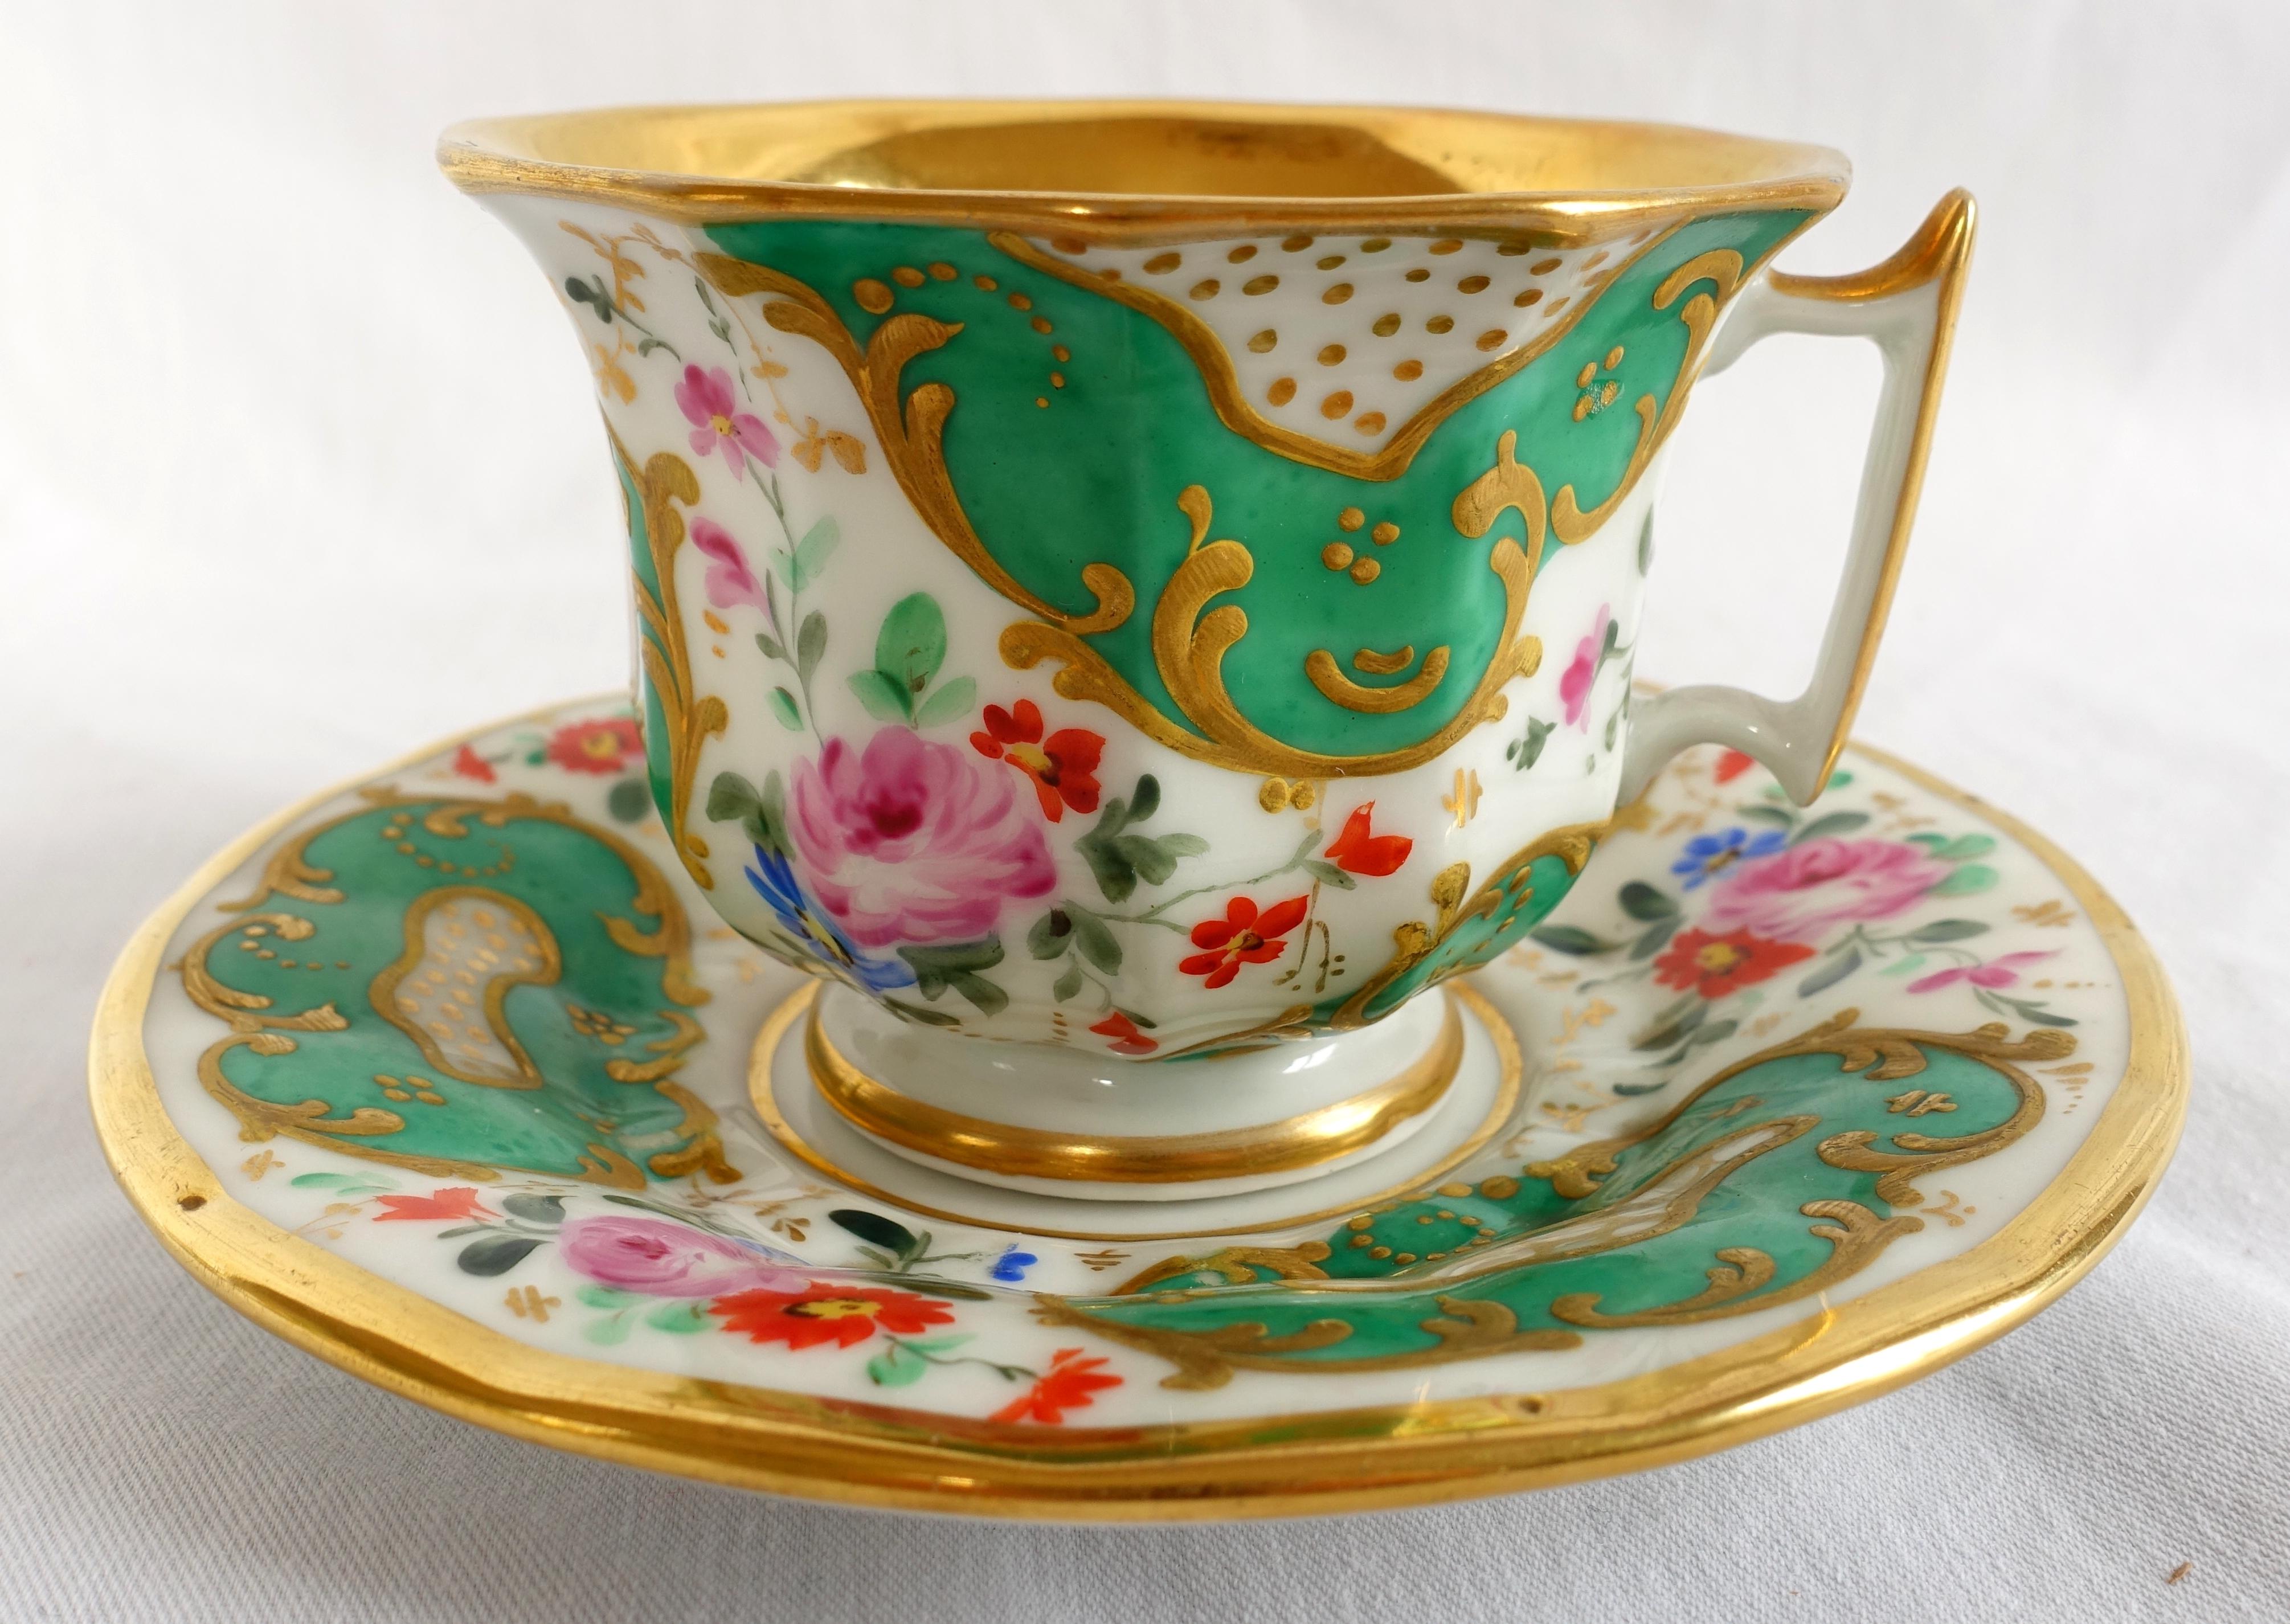 Louis Philippe Antique French Paris porcelain coffee set for 6 - cups & saucers - 19th century